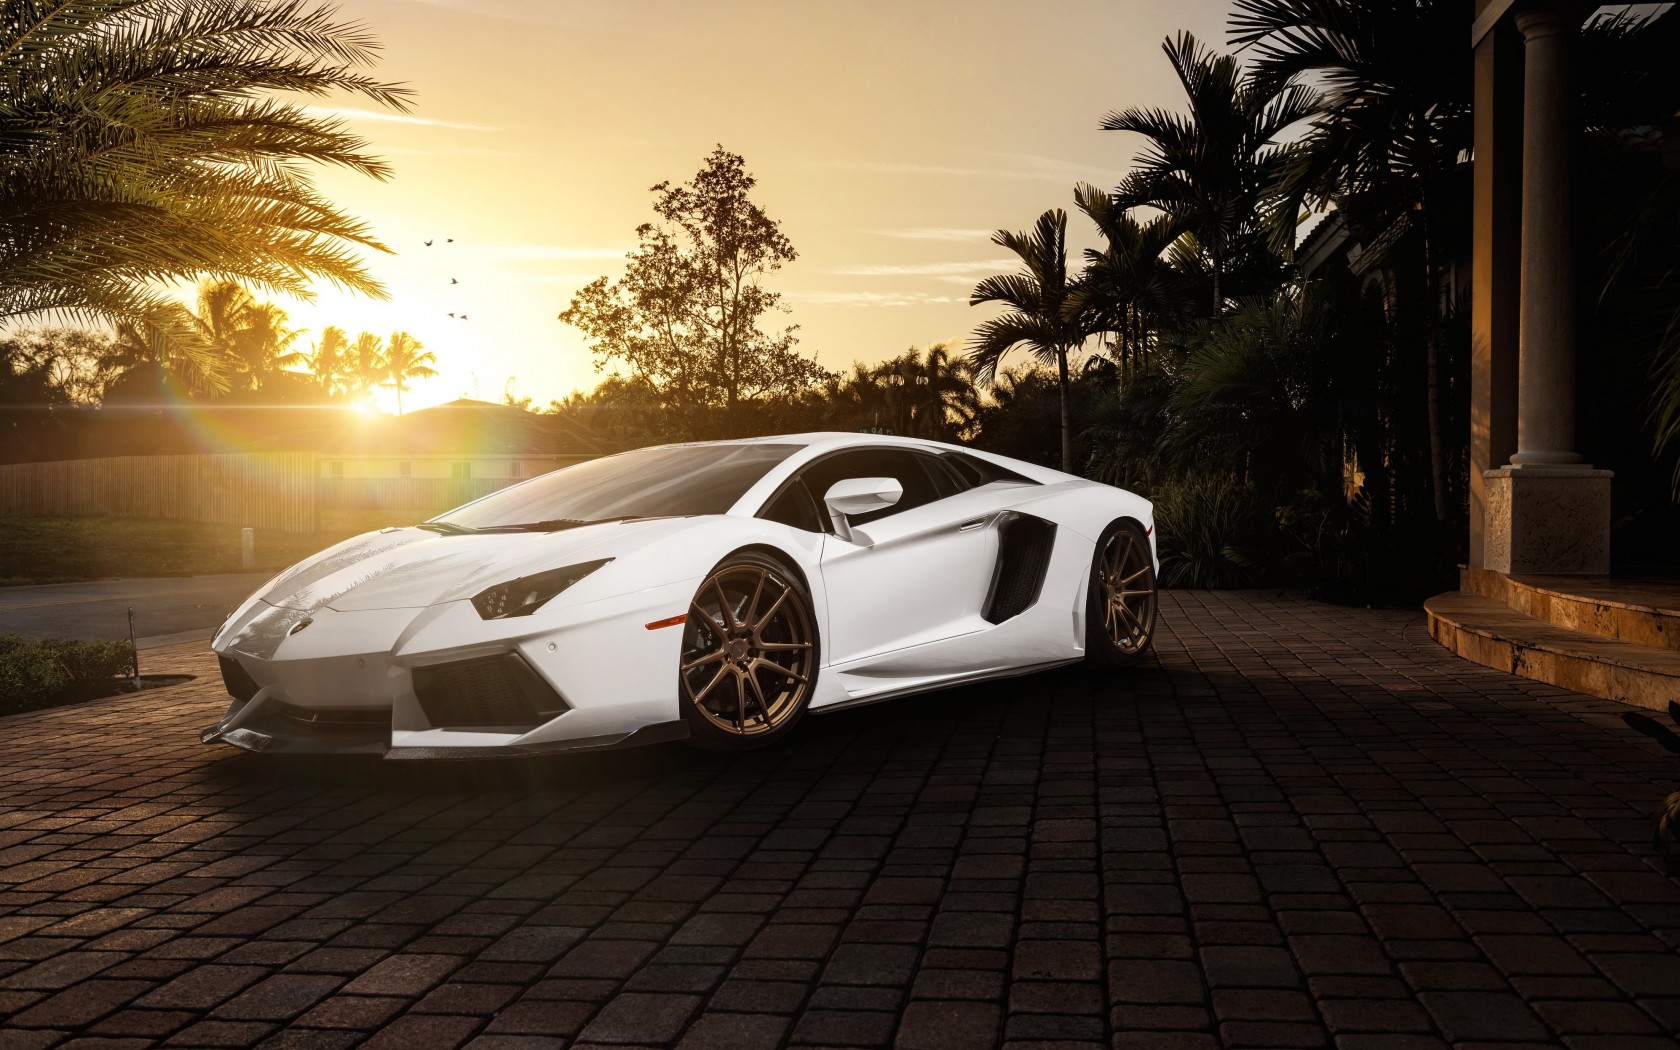 Lamborghini Aventador LP700-4 in White Wallpaper for Desktop 1680x1050